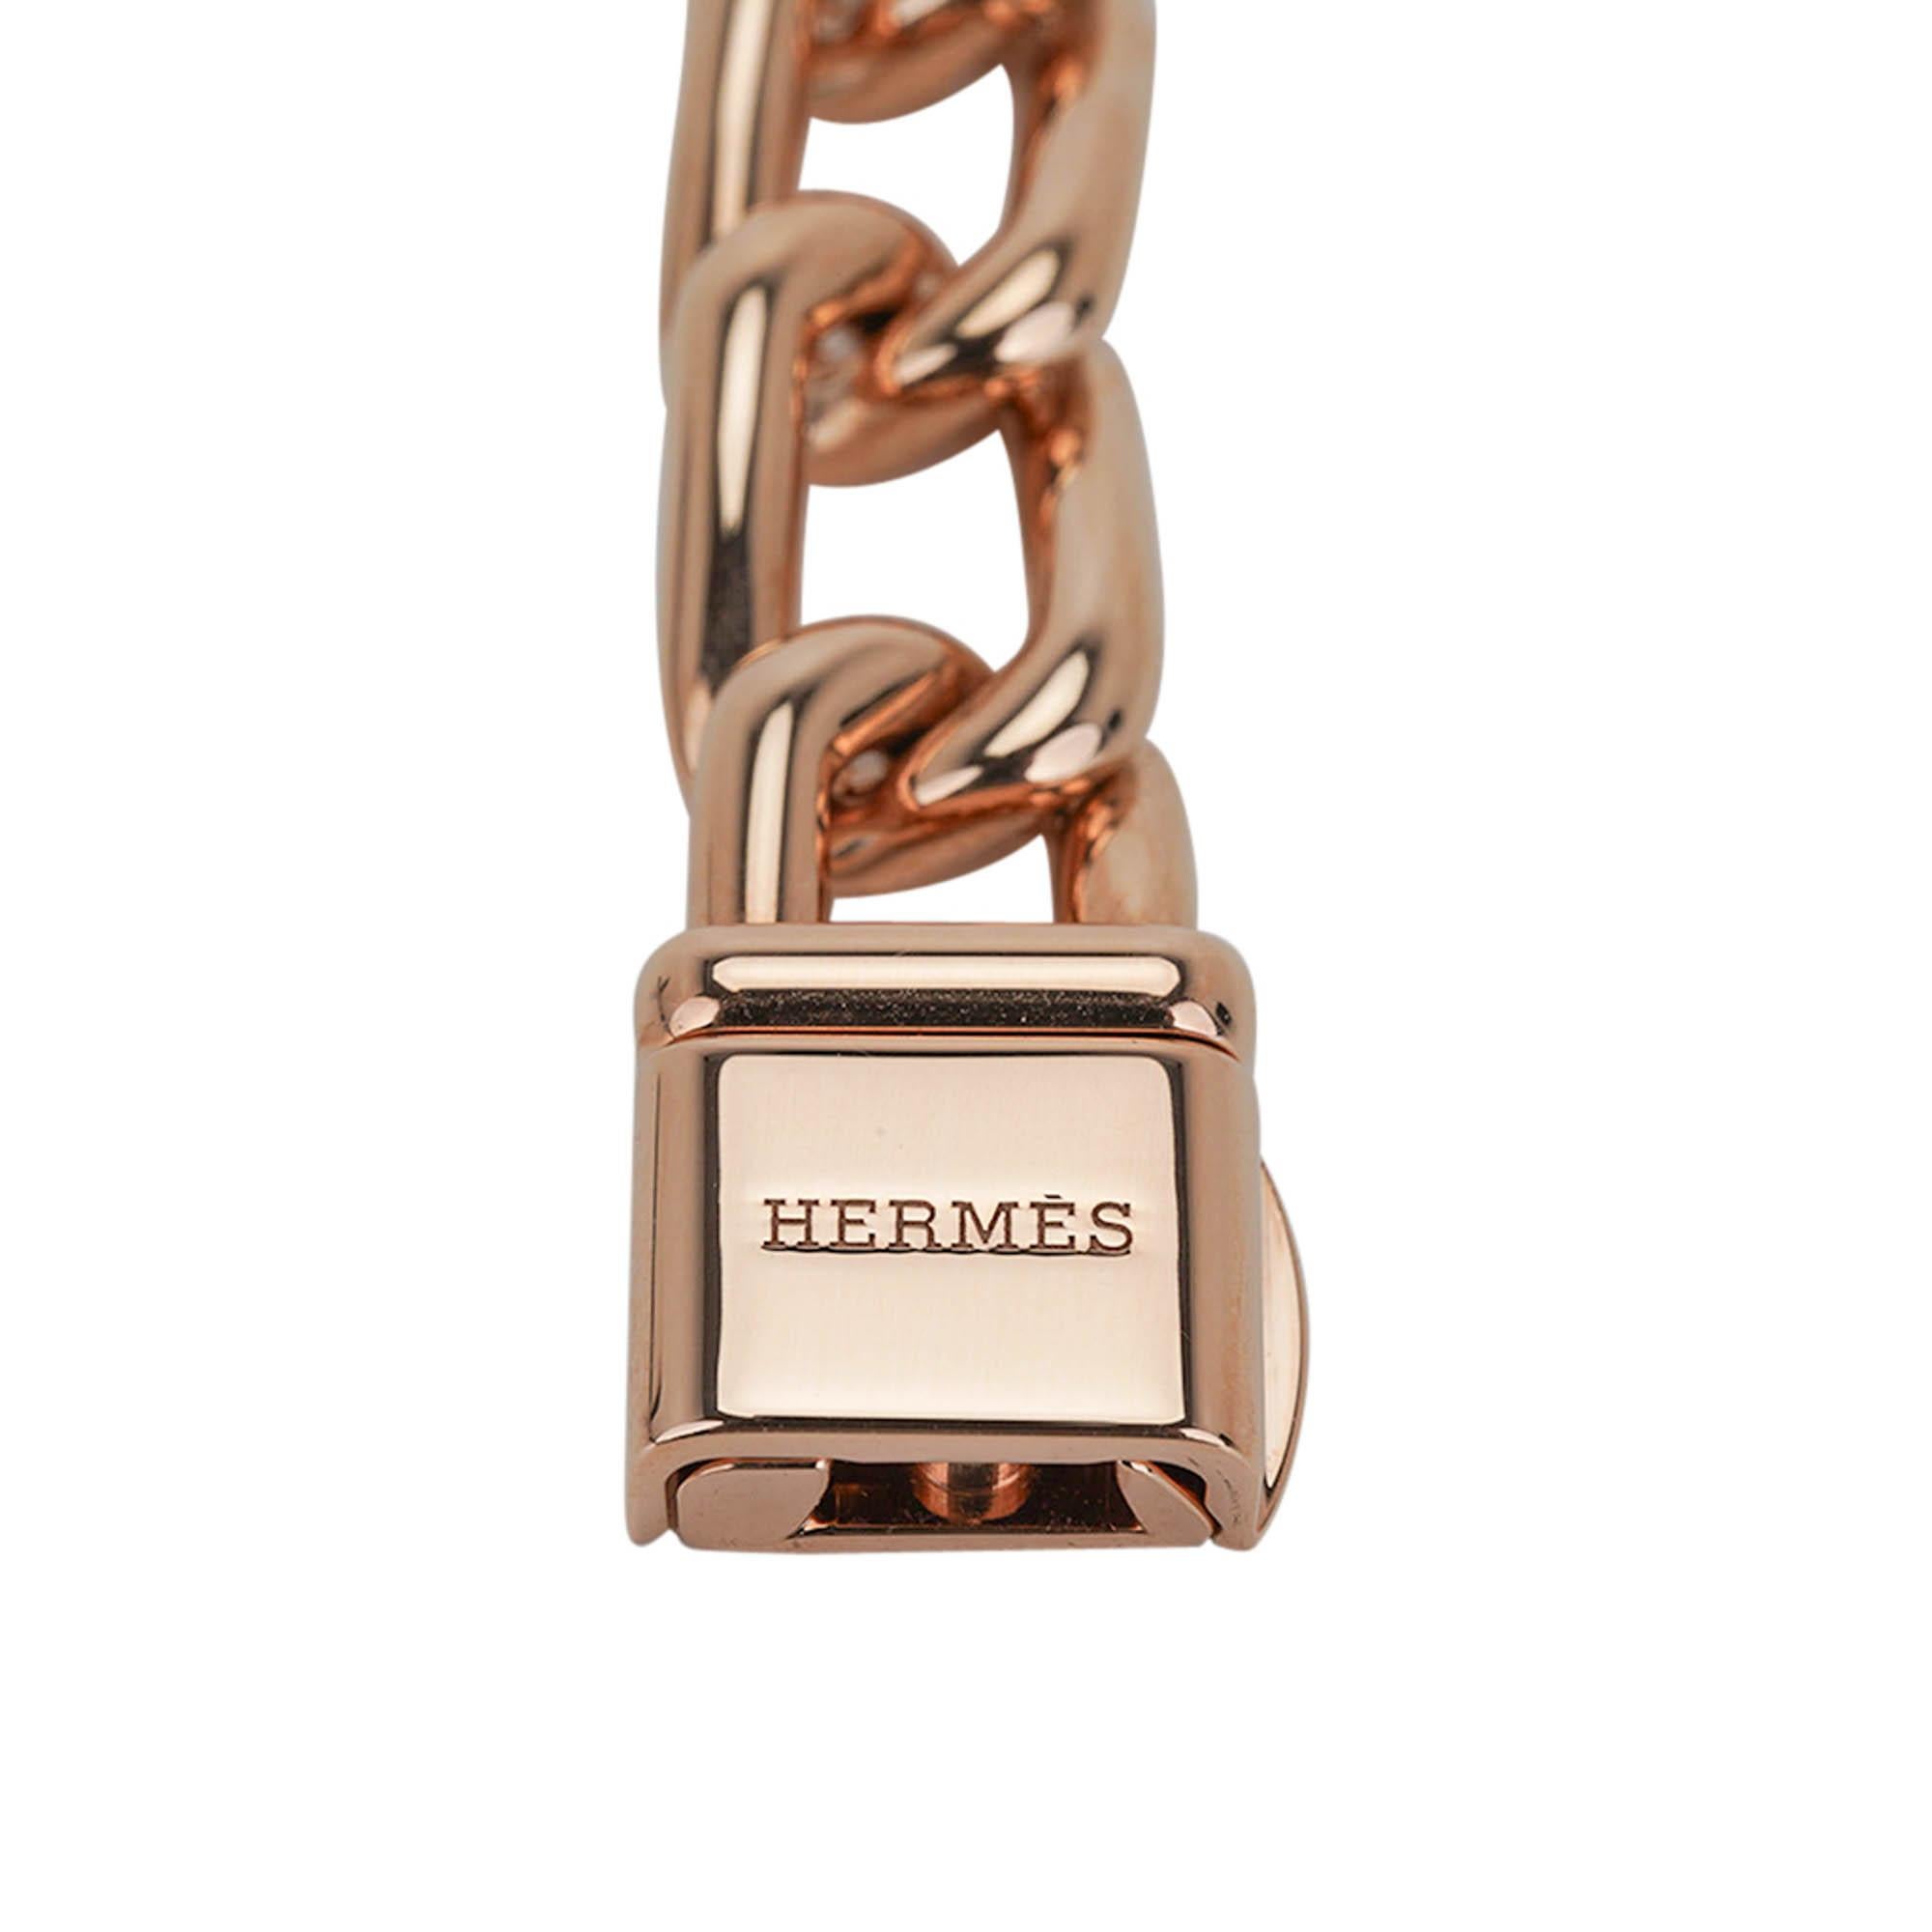 Hermes Watch Nantucket Rose Gold 18k Small Model For Sale 1